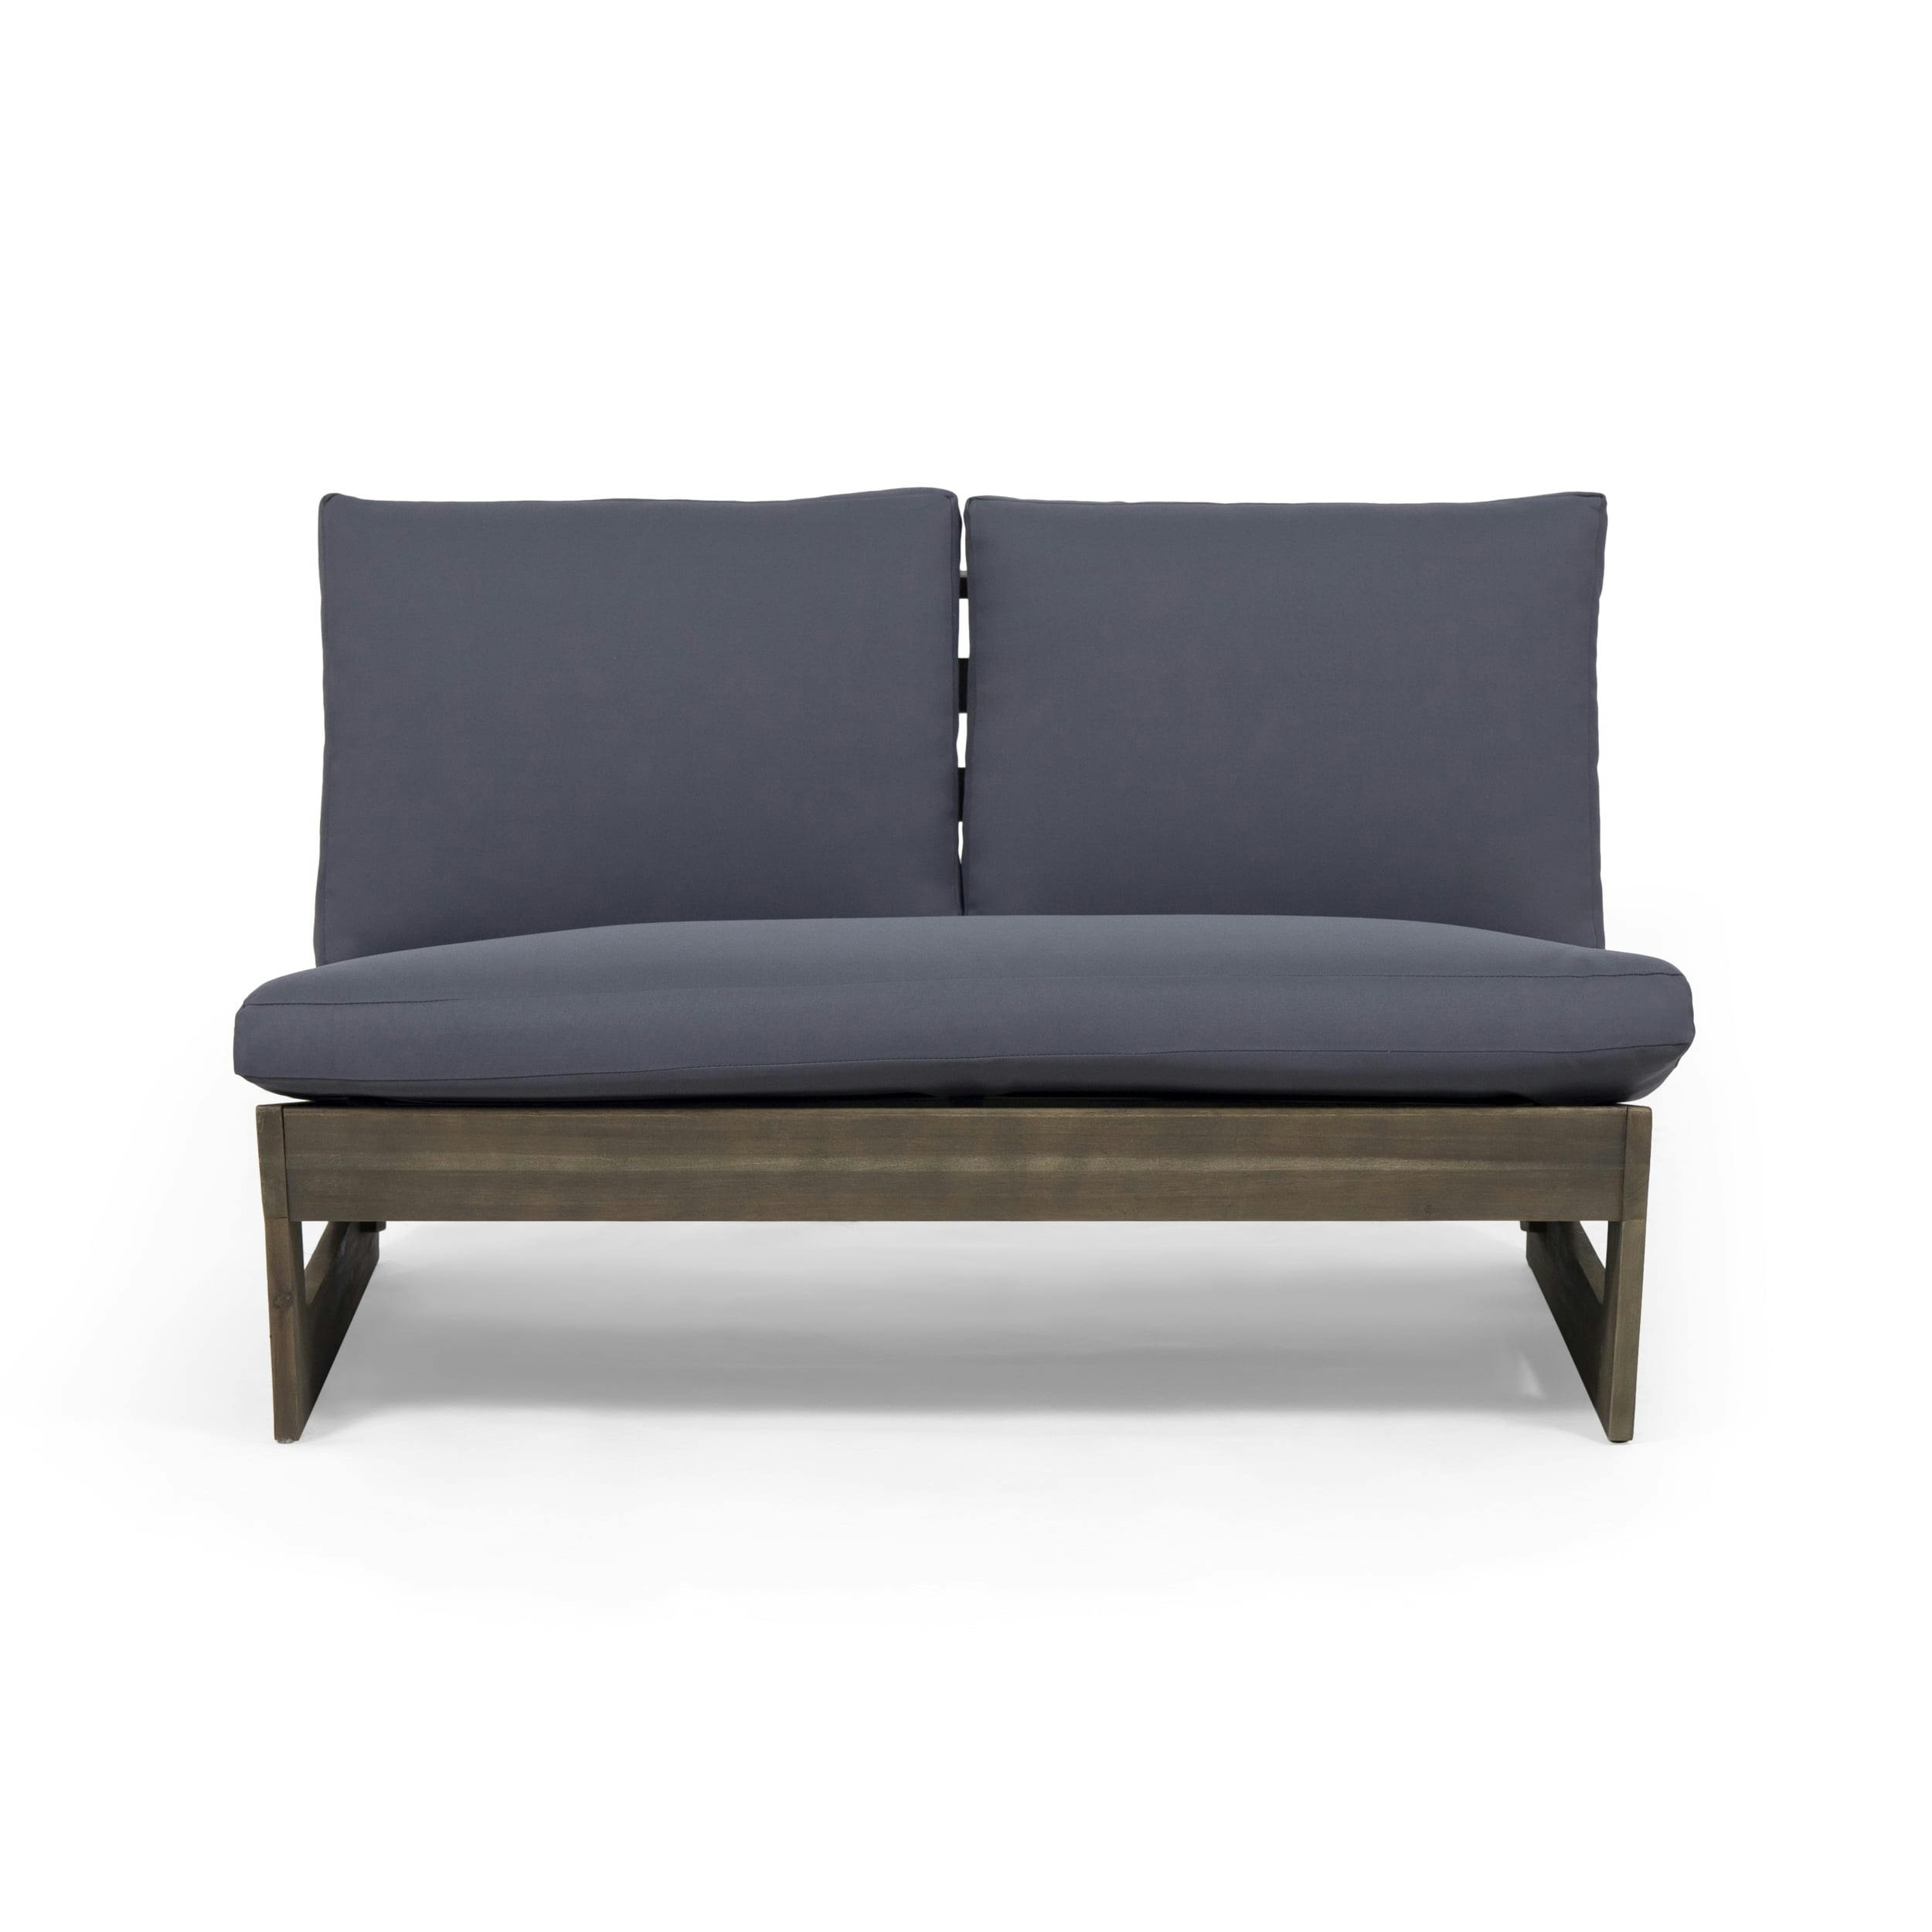 Sleek Grey Acacia Wood Loveseat with Water-Resistant Dark Grey Cushions